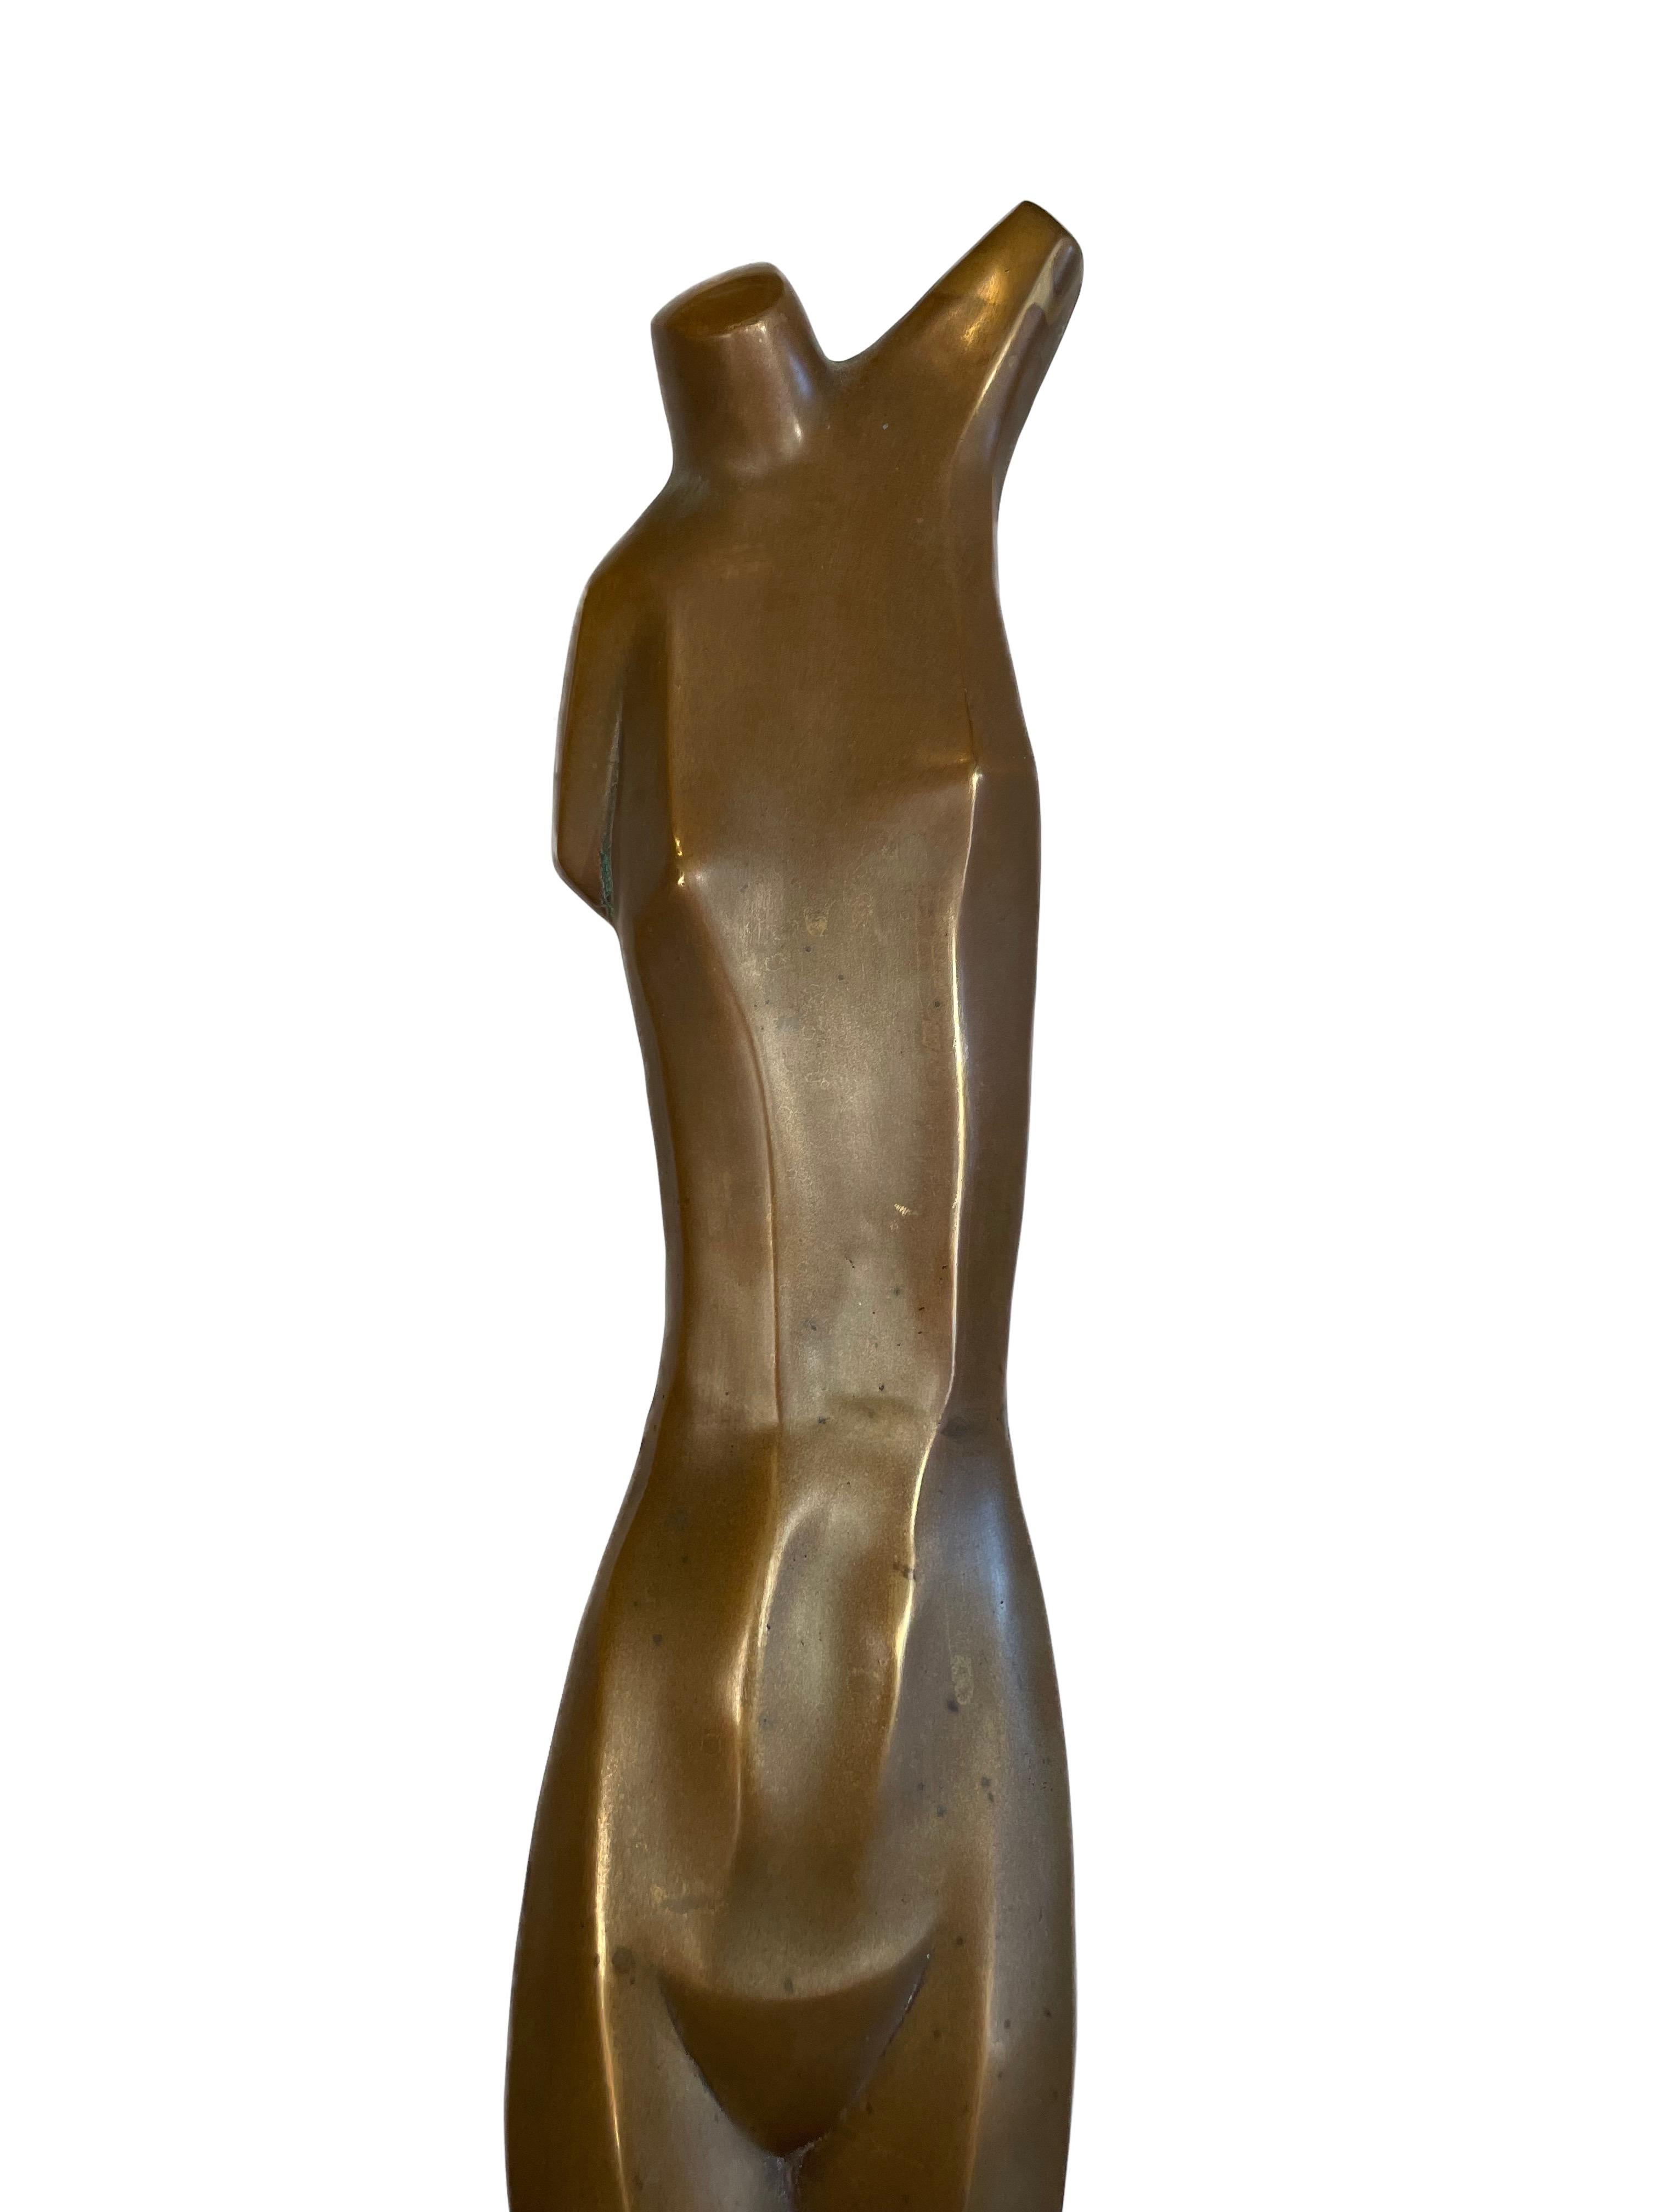 Sleek bronze sculpture of a nude figure. 
This sculpture of an elongated torso made of hollow but thick bronze, standing on an attached bronze base.
 